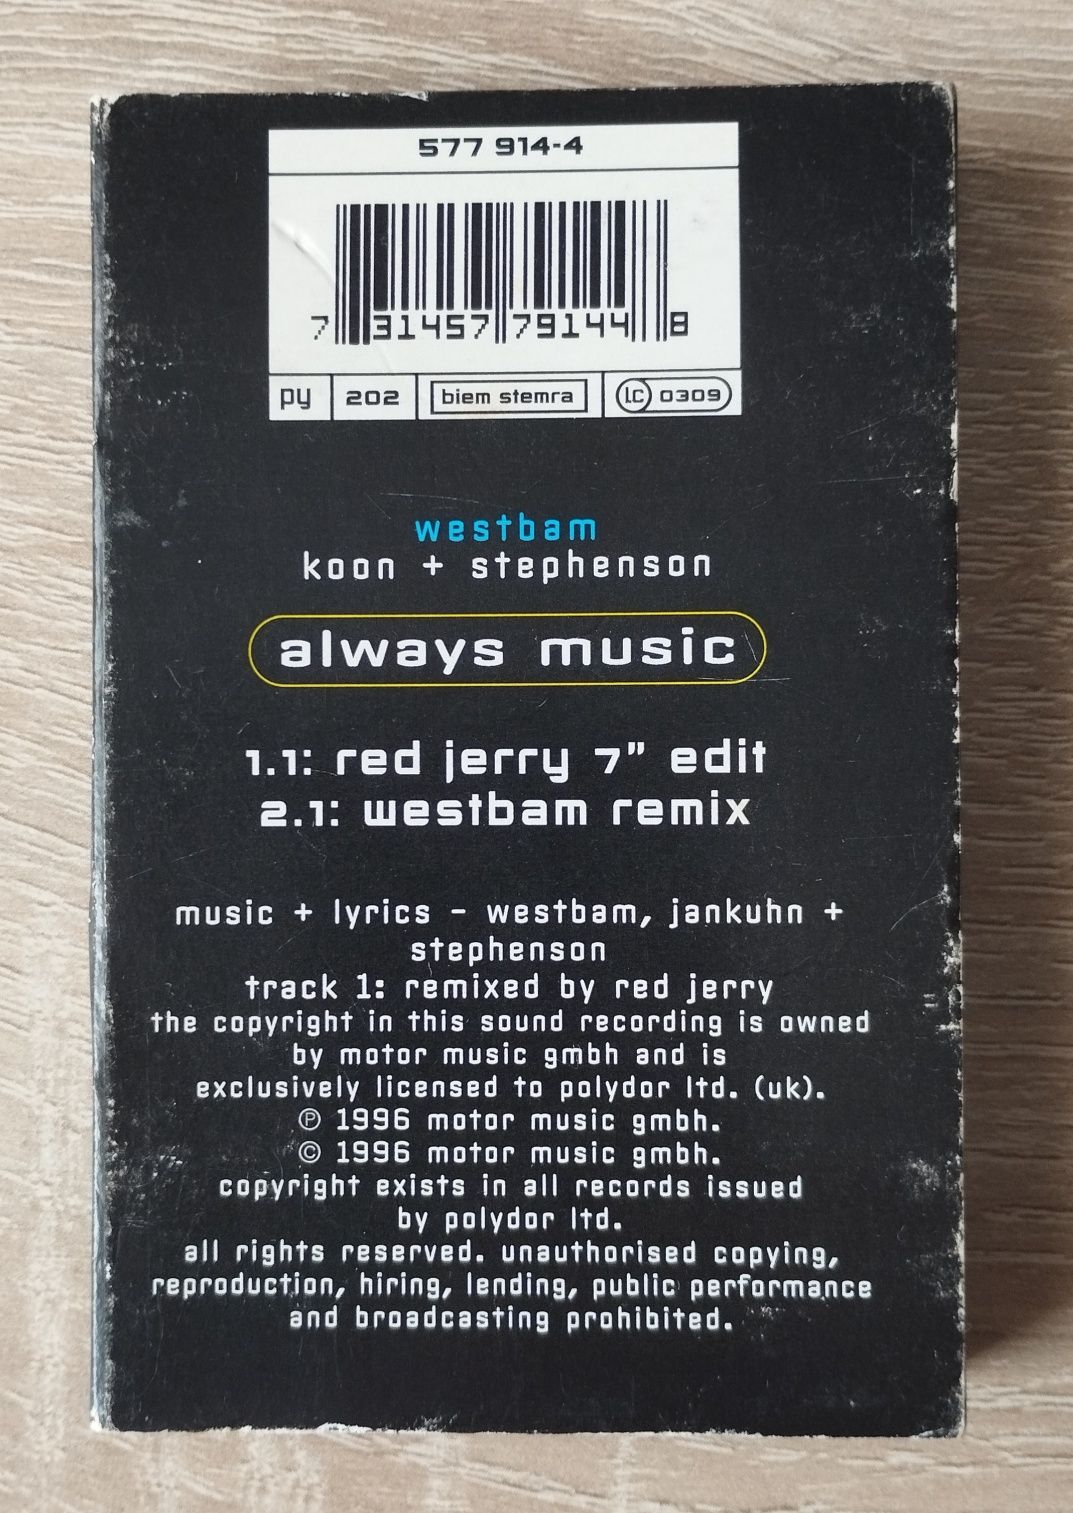 WestBam, Koon + Stephenson – Always Music 1996 [Single MC]